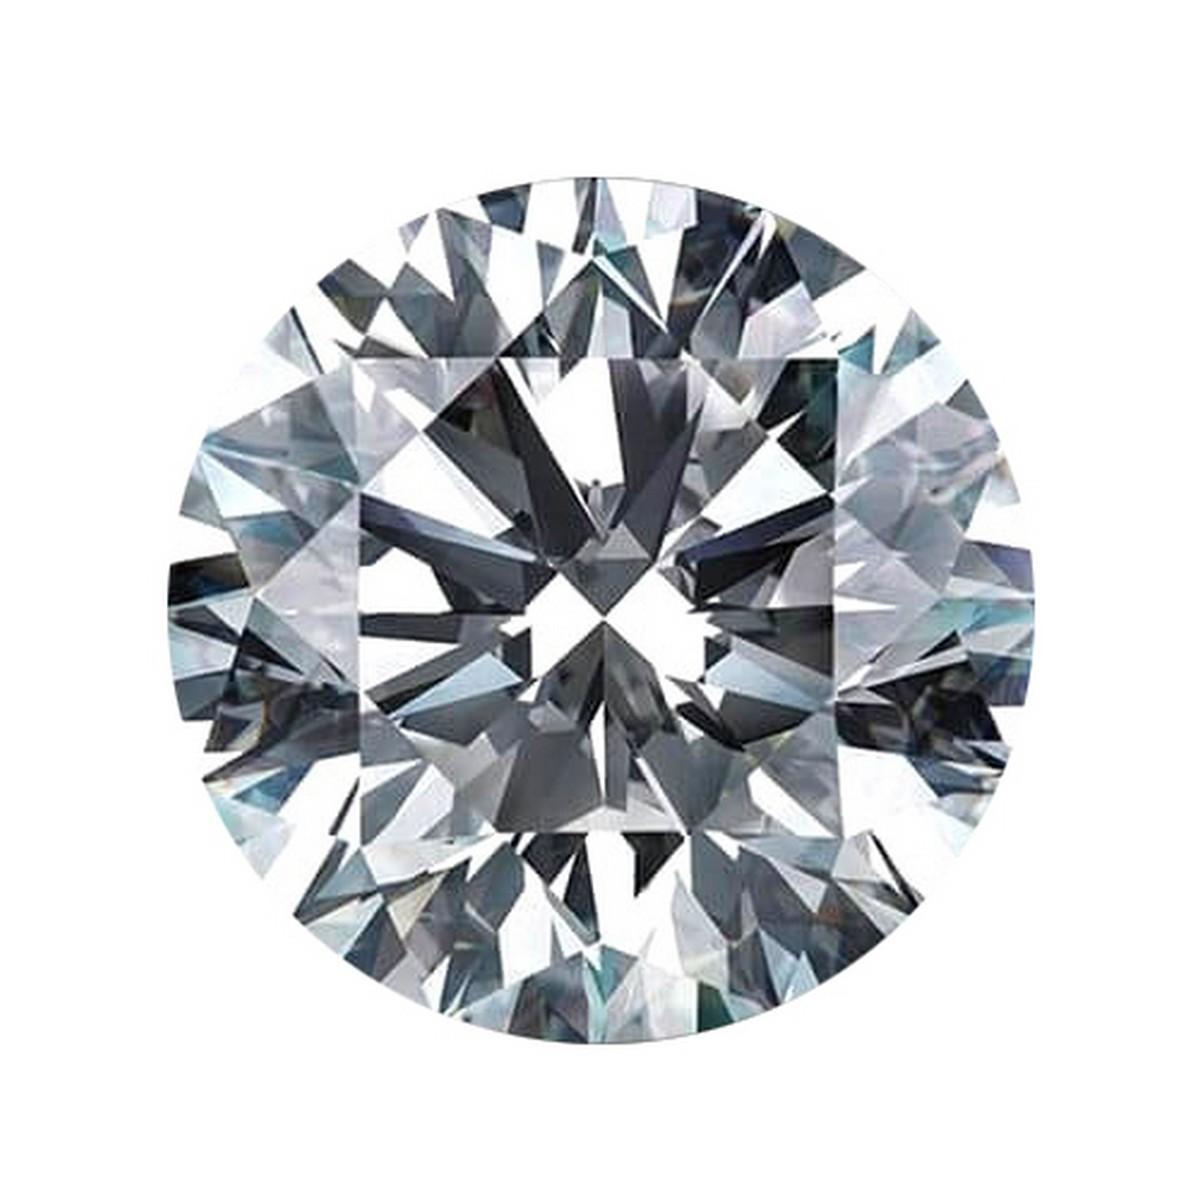 1.89 ctw. VVS2 IGI Certified Round Brilliant Cut Loose Diamond (LAB GROWN)